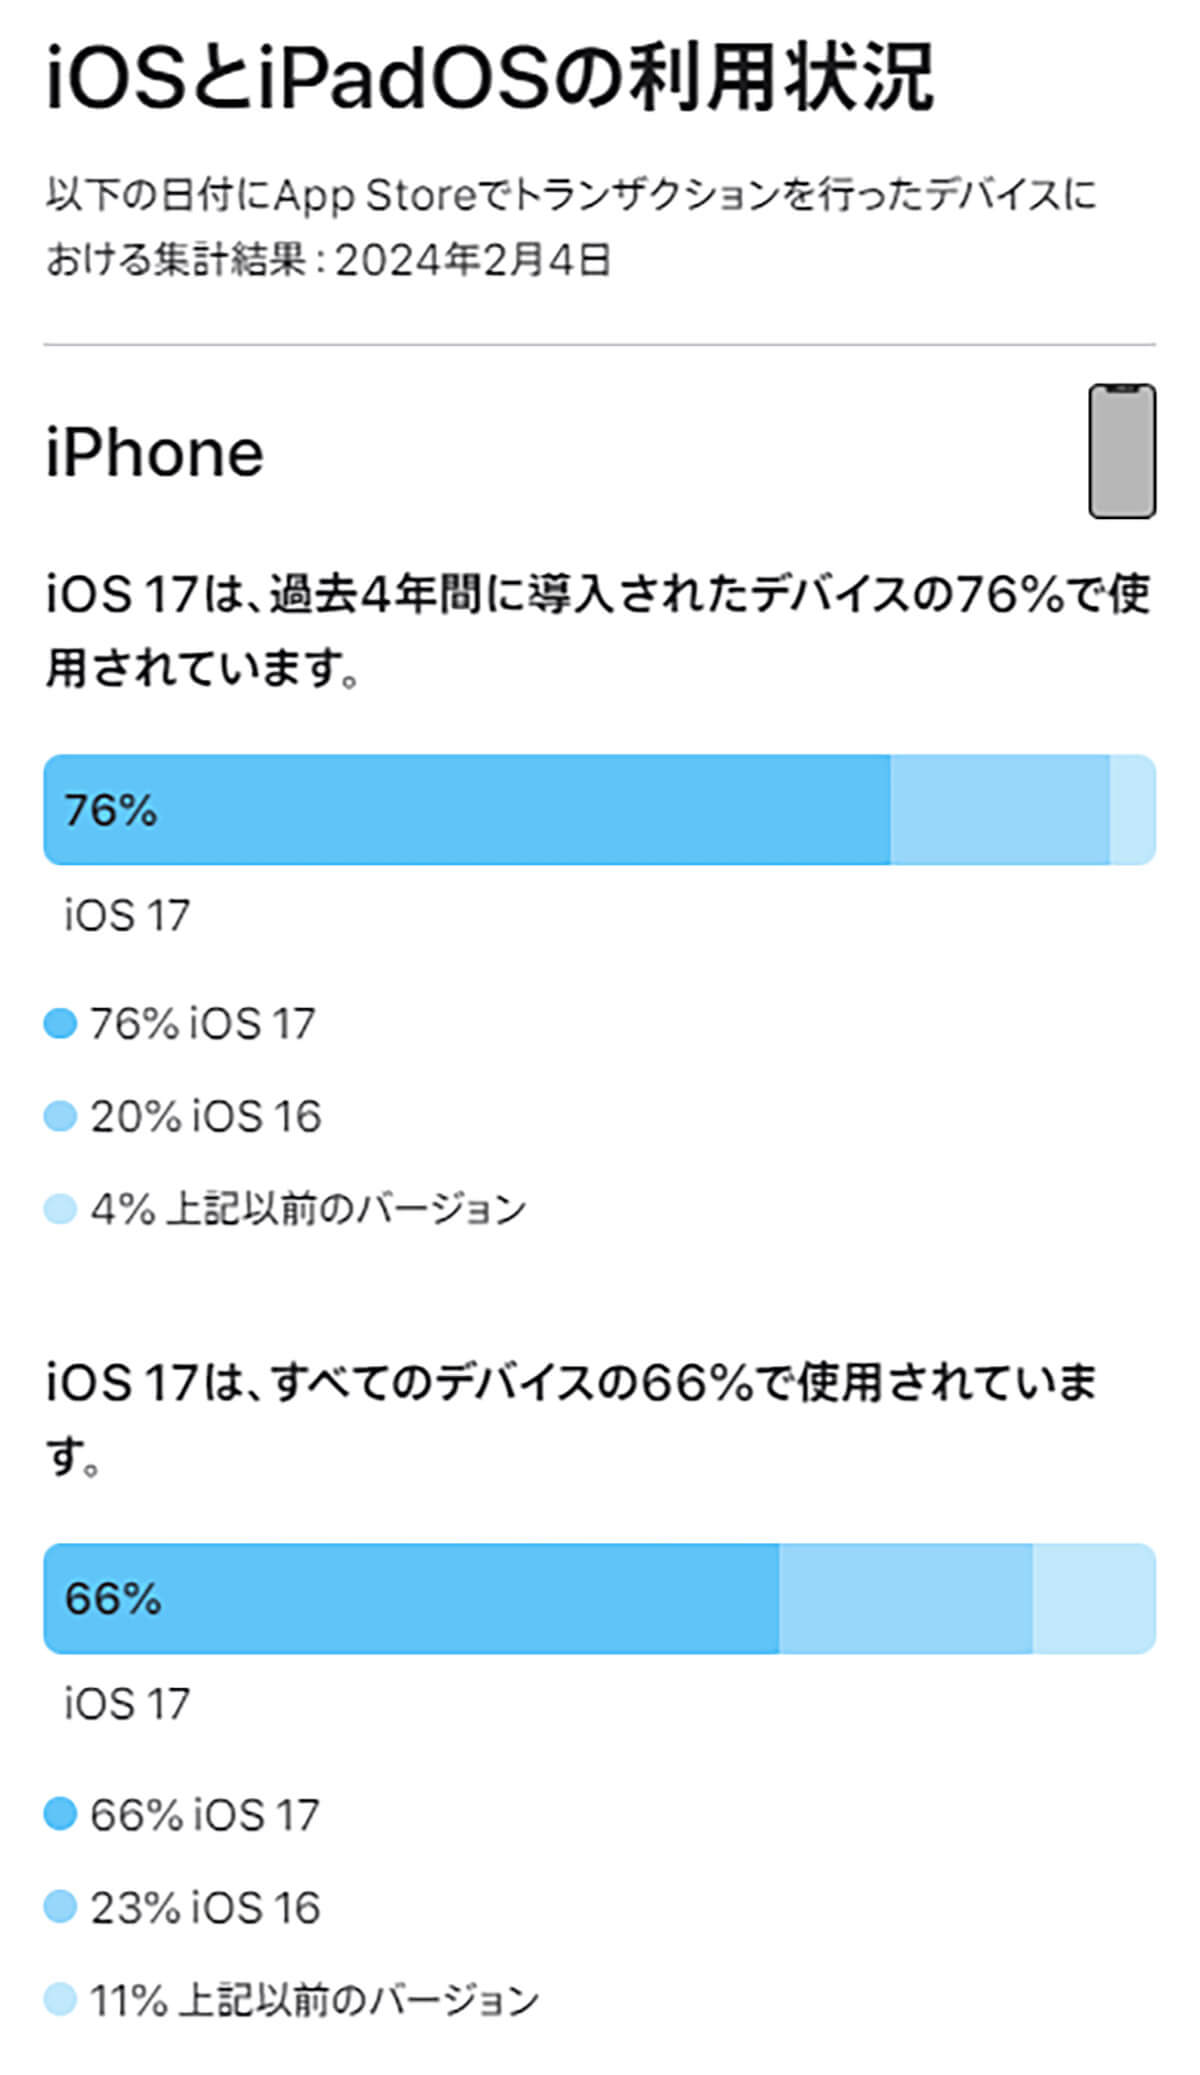 iOSといPadOSの利用状況